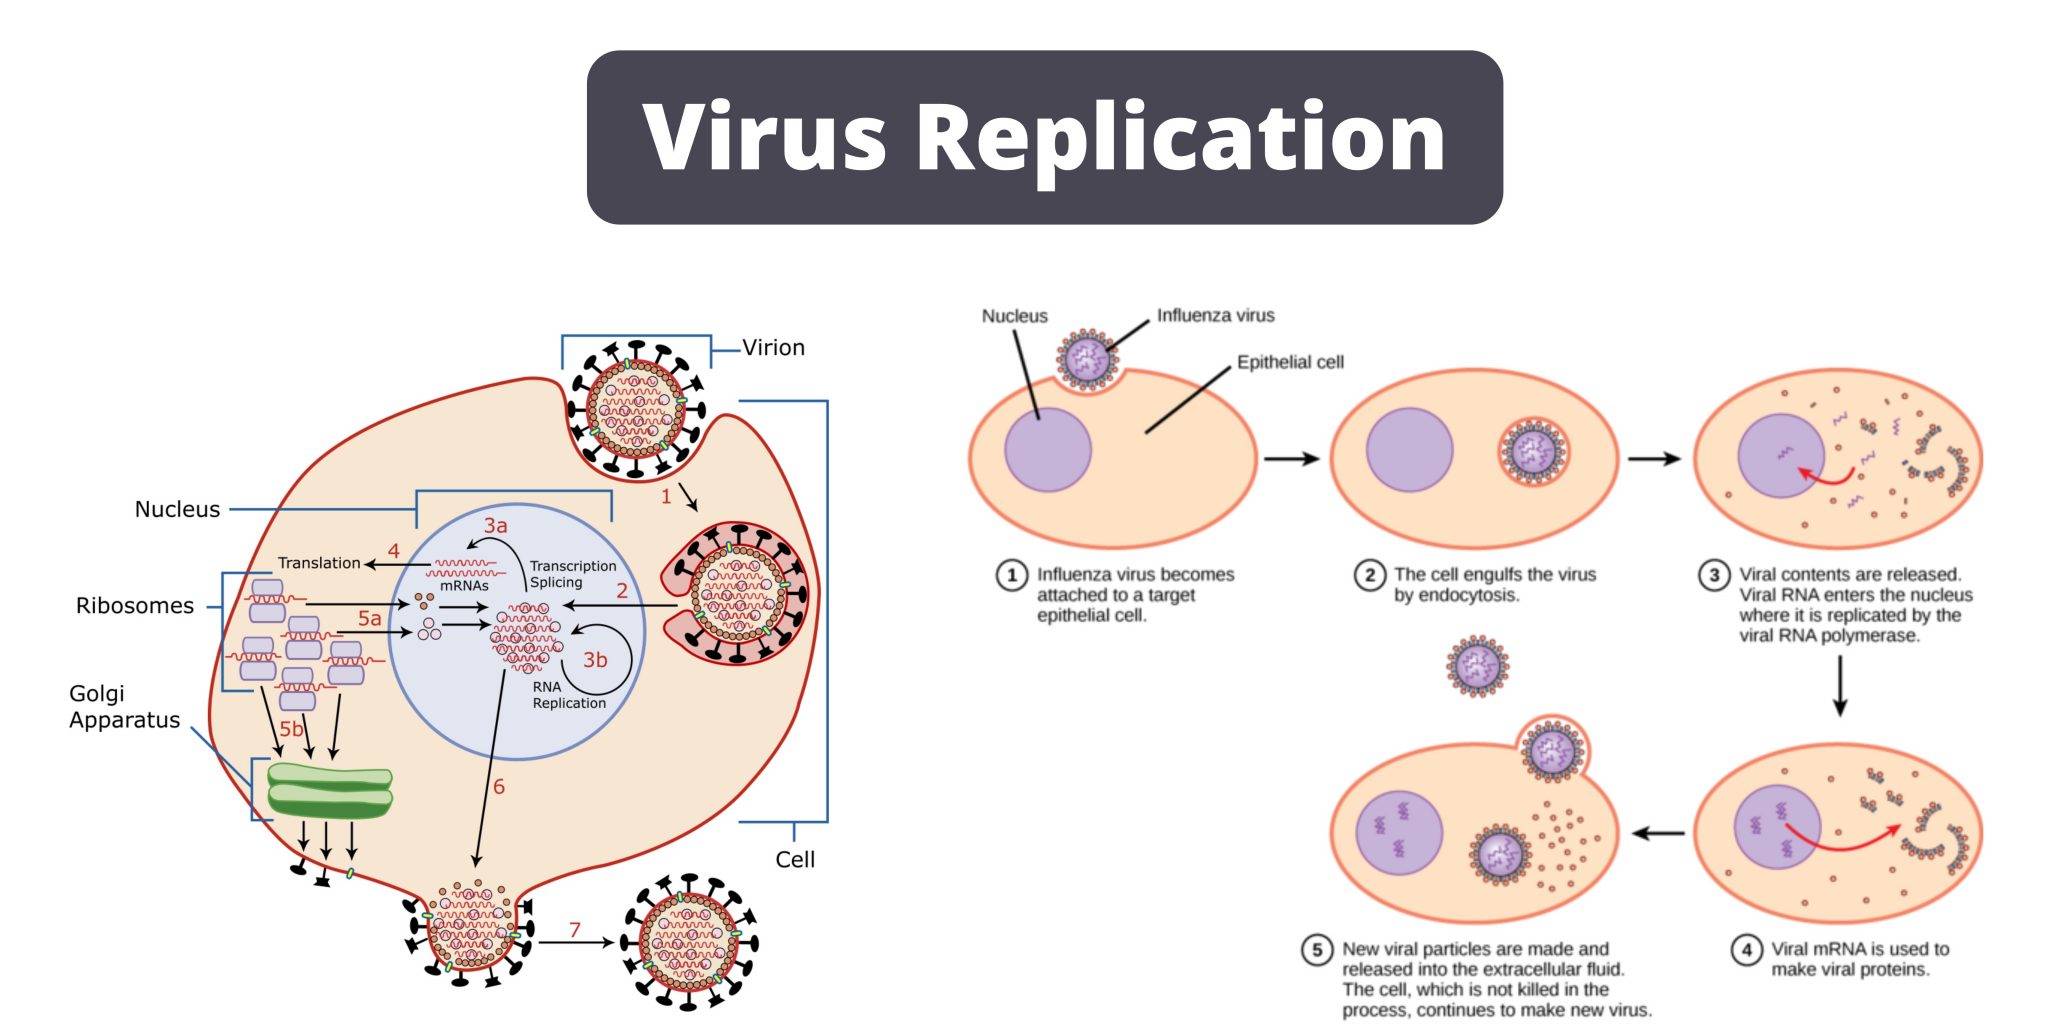 presentation on viral replication